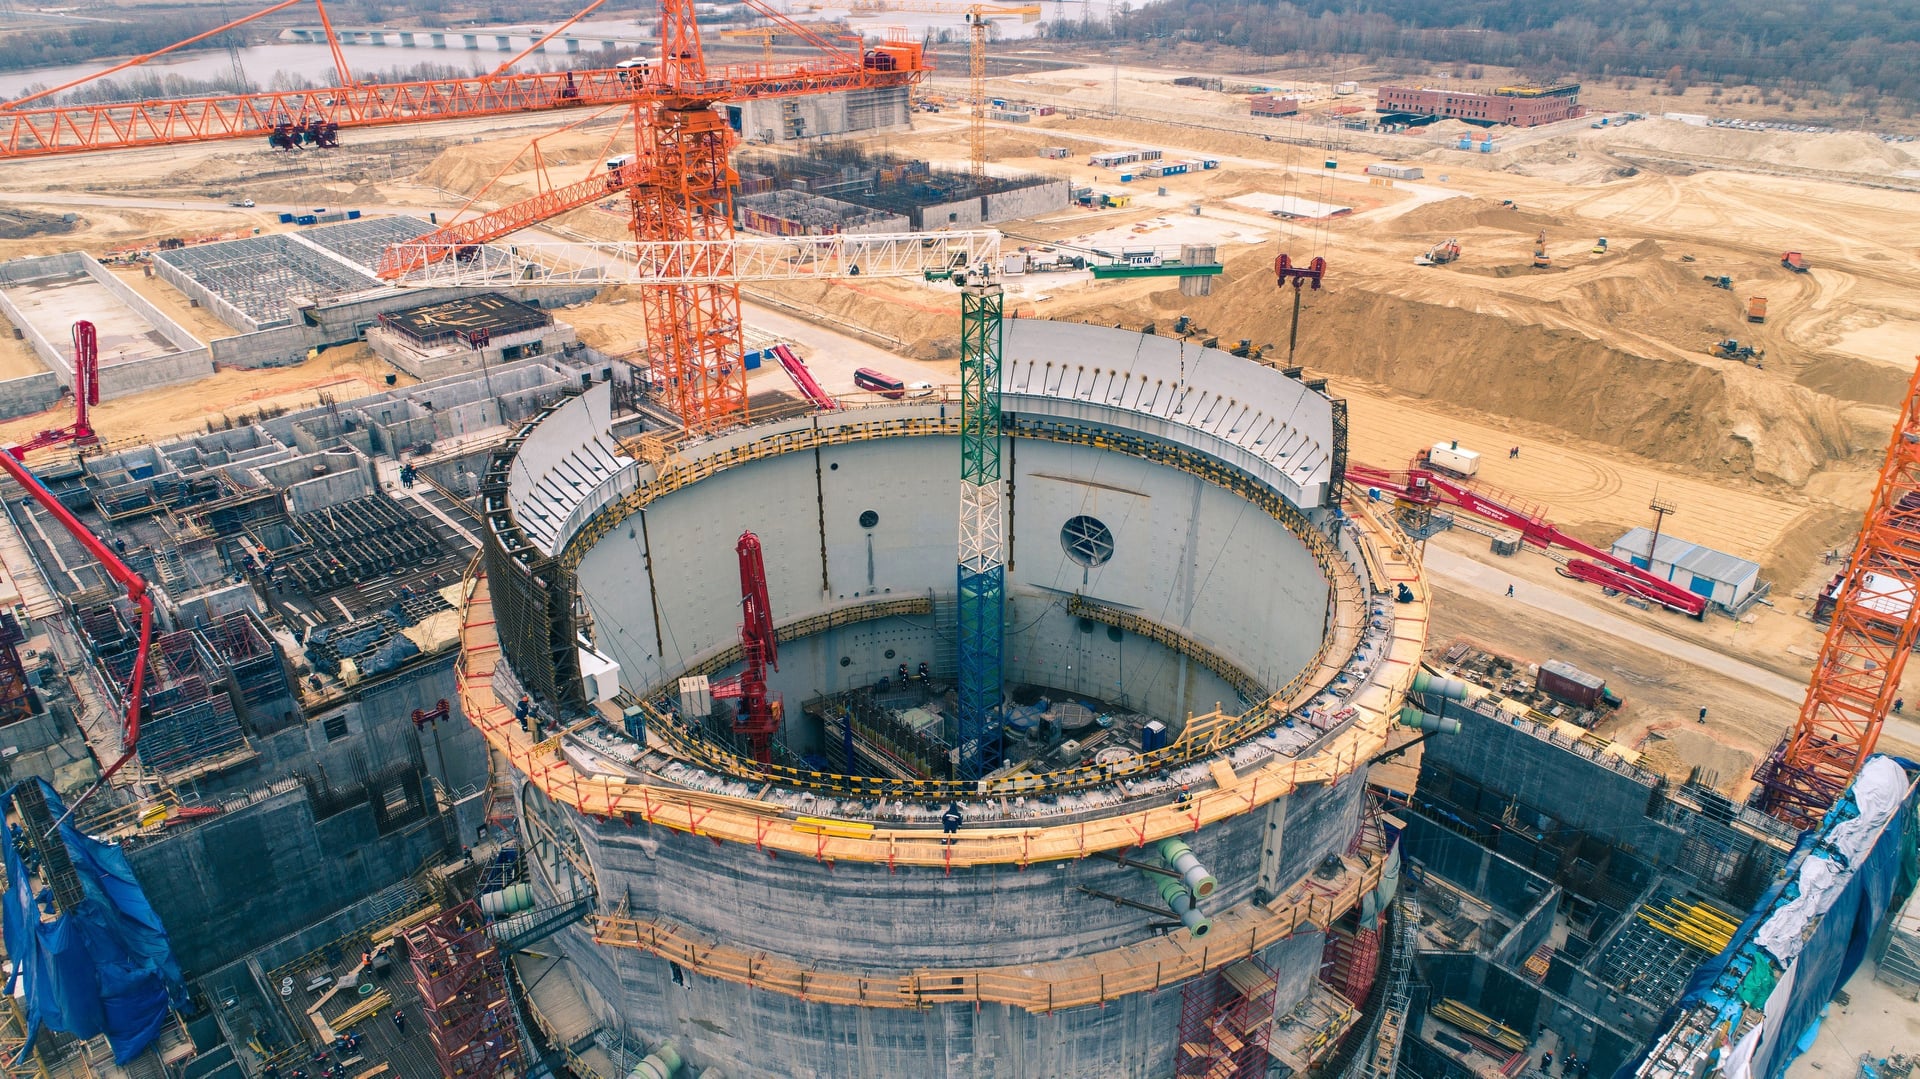 Обнародована дата запуска первой АЭС в Узбекистане